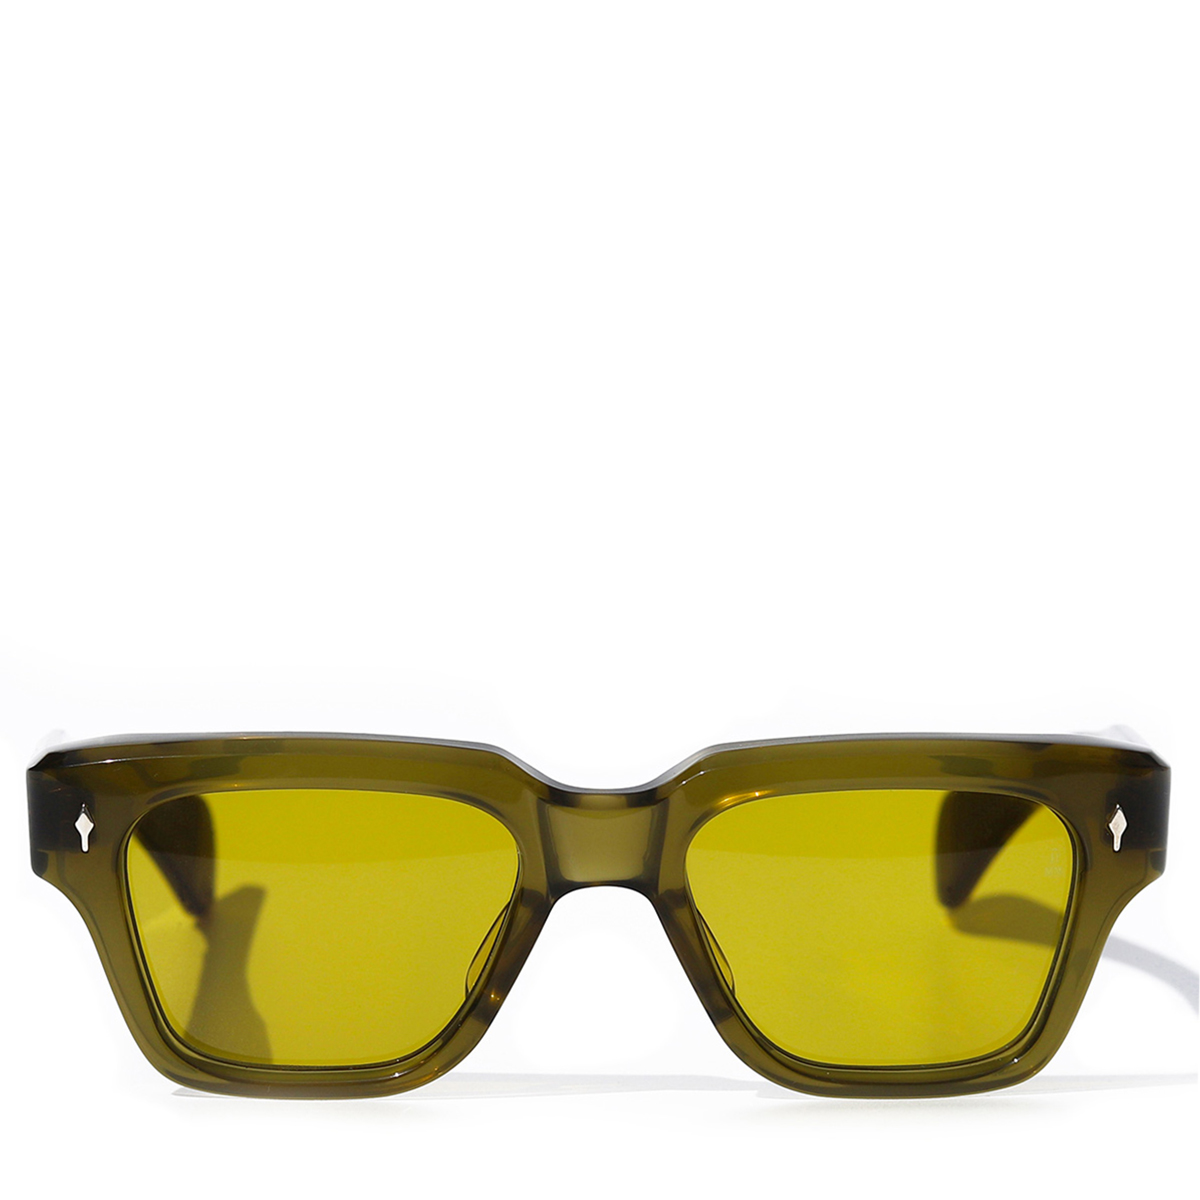 Jacques Marie Mage – Fellini Volvox sunglasses